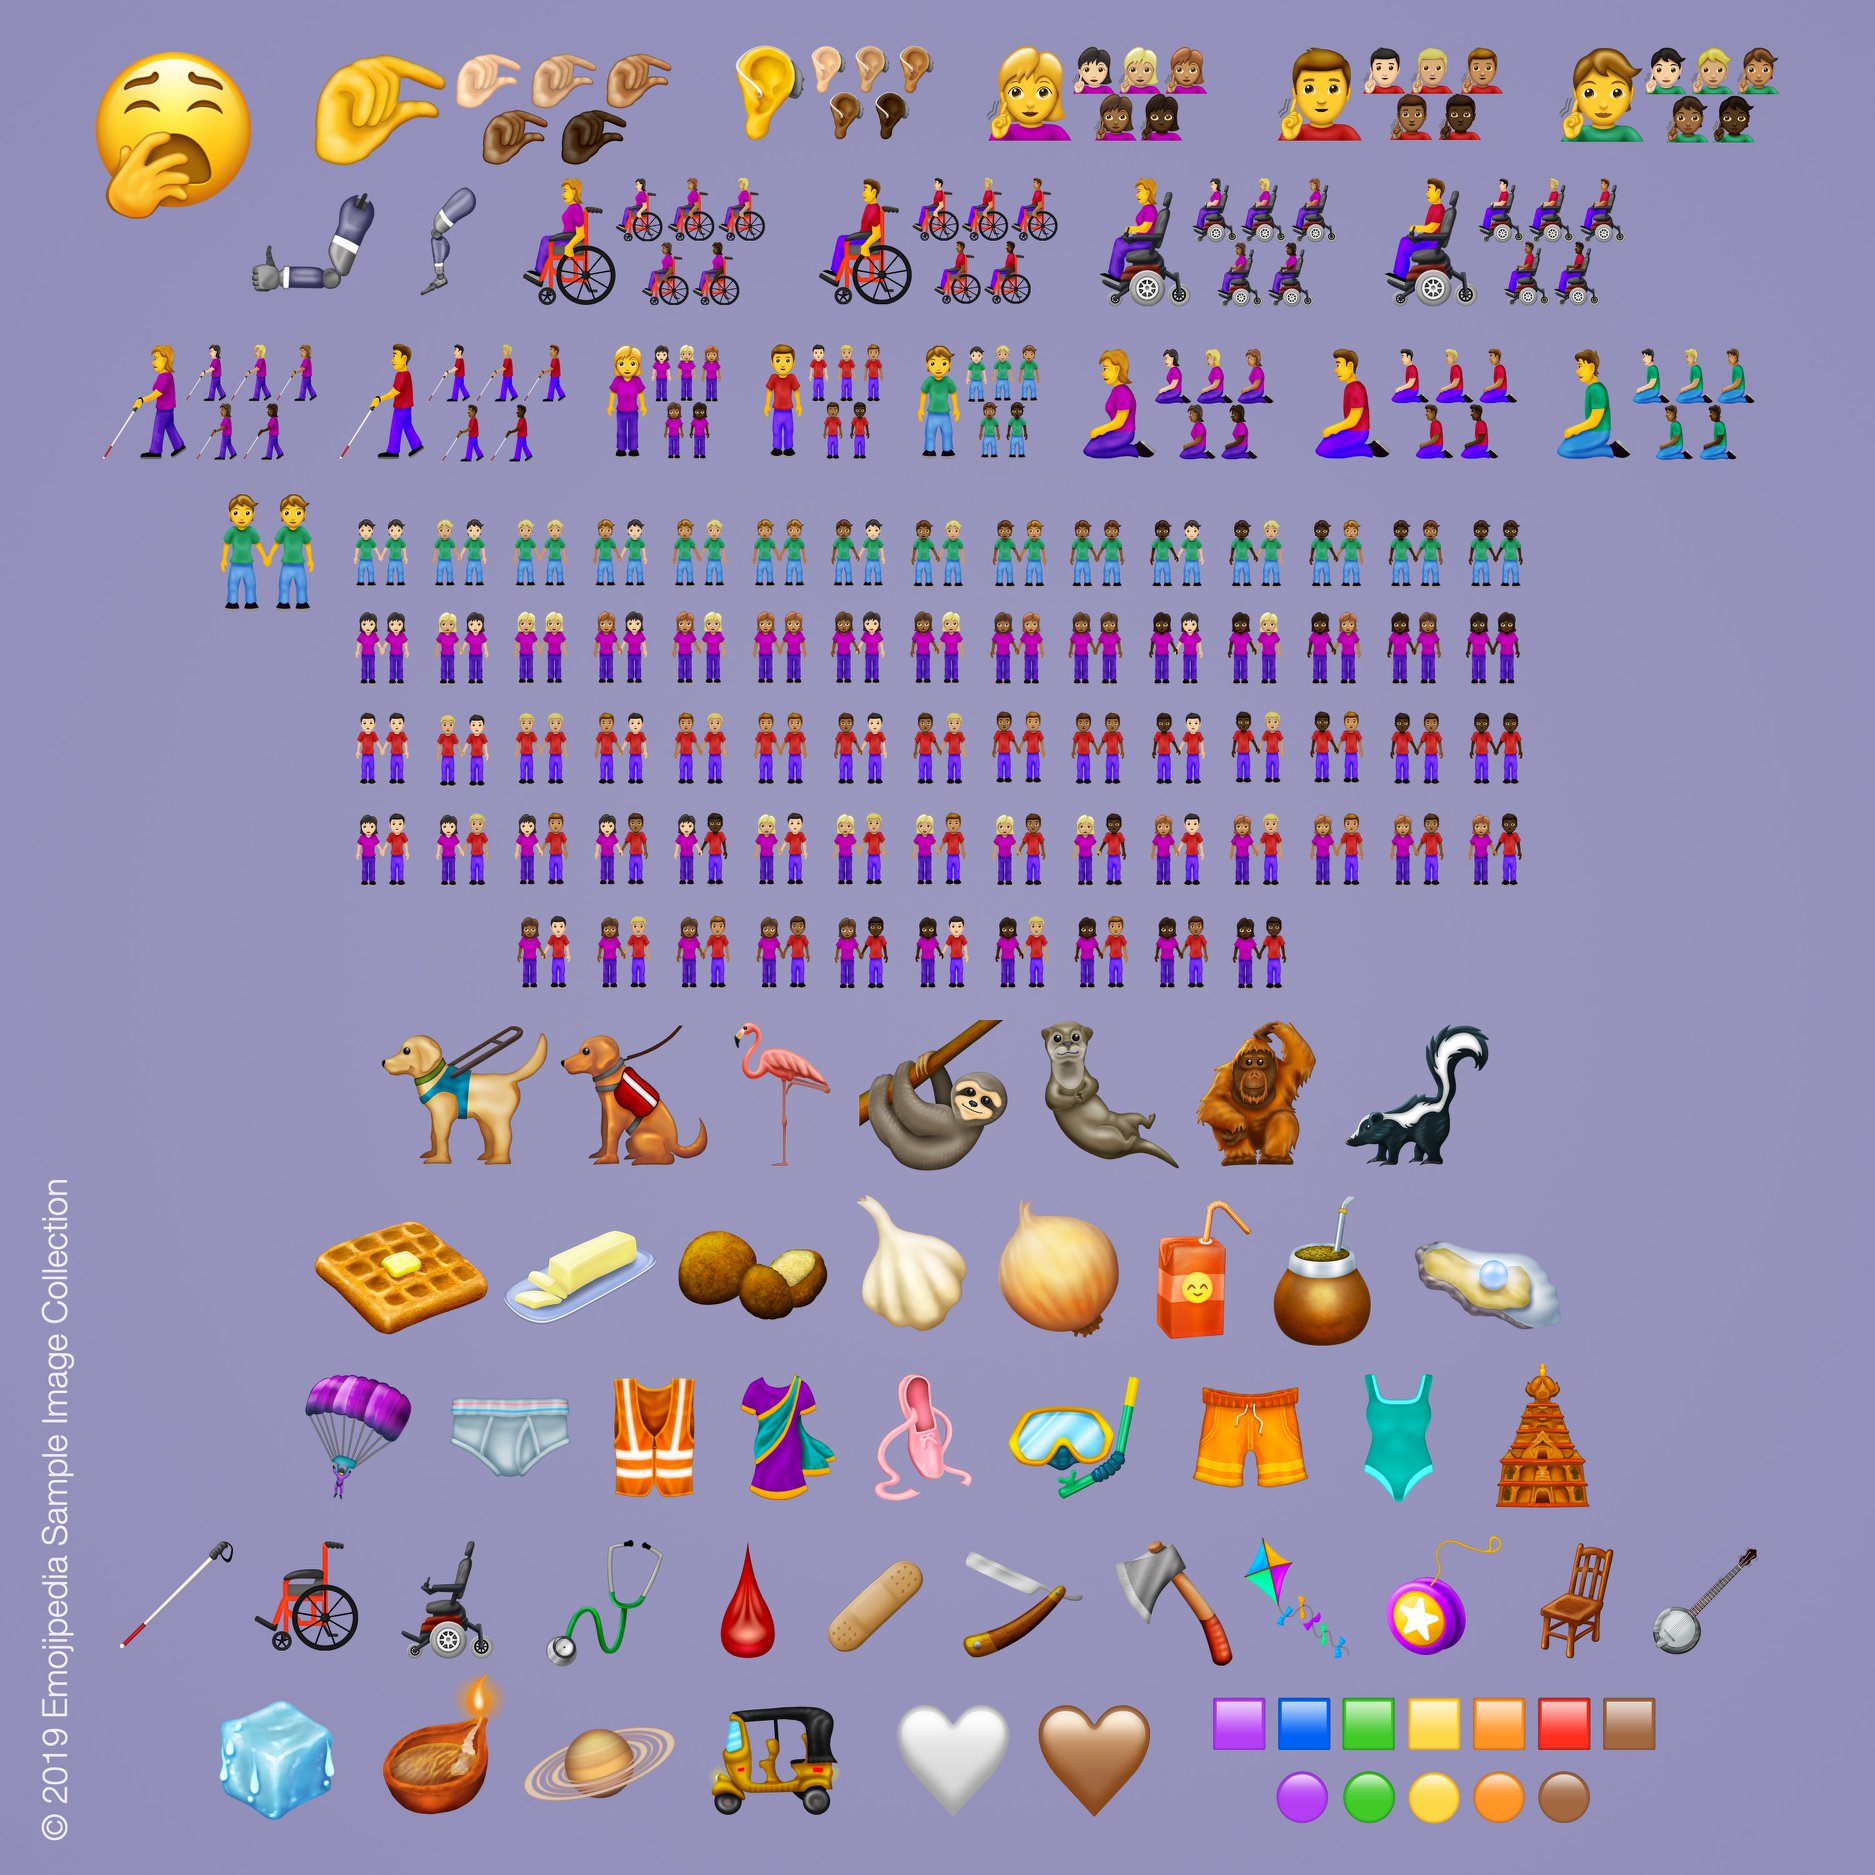 Dal'orango al falafel: le più strane emoji in arrivo